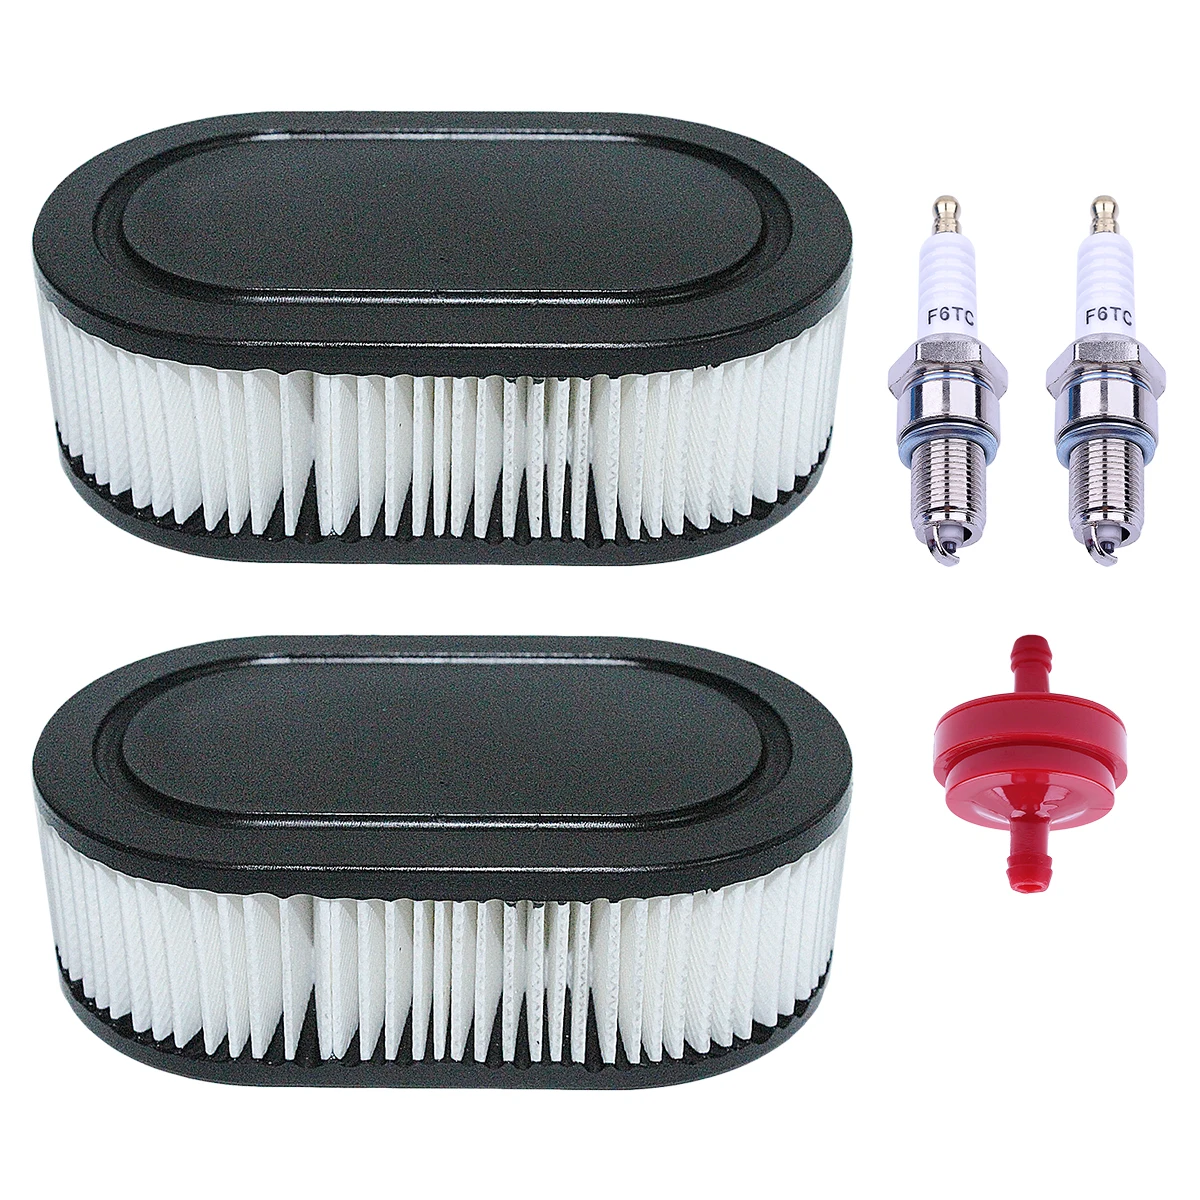 2pcs Air Filter Spark Plugs for Briggs & Stratton 550E 550EX Eco-Plus Series 575EX Engines replaces 798339 798452 593260